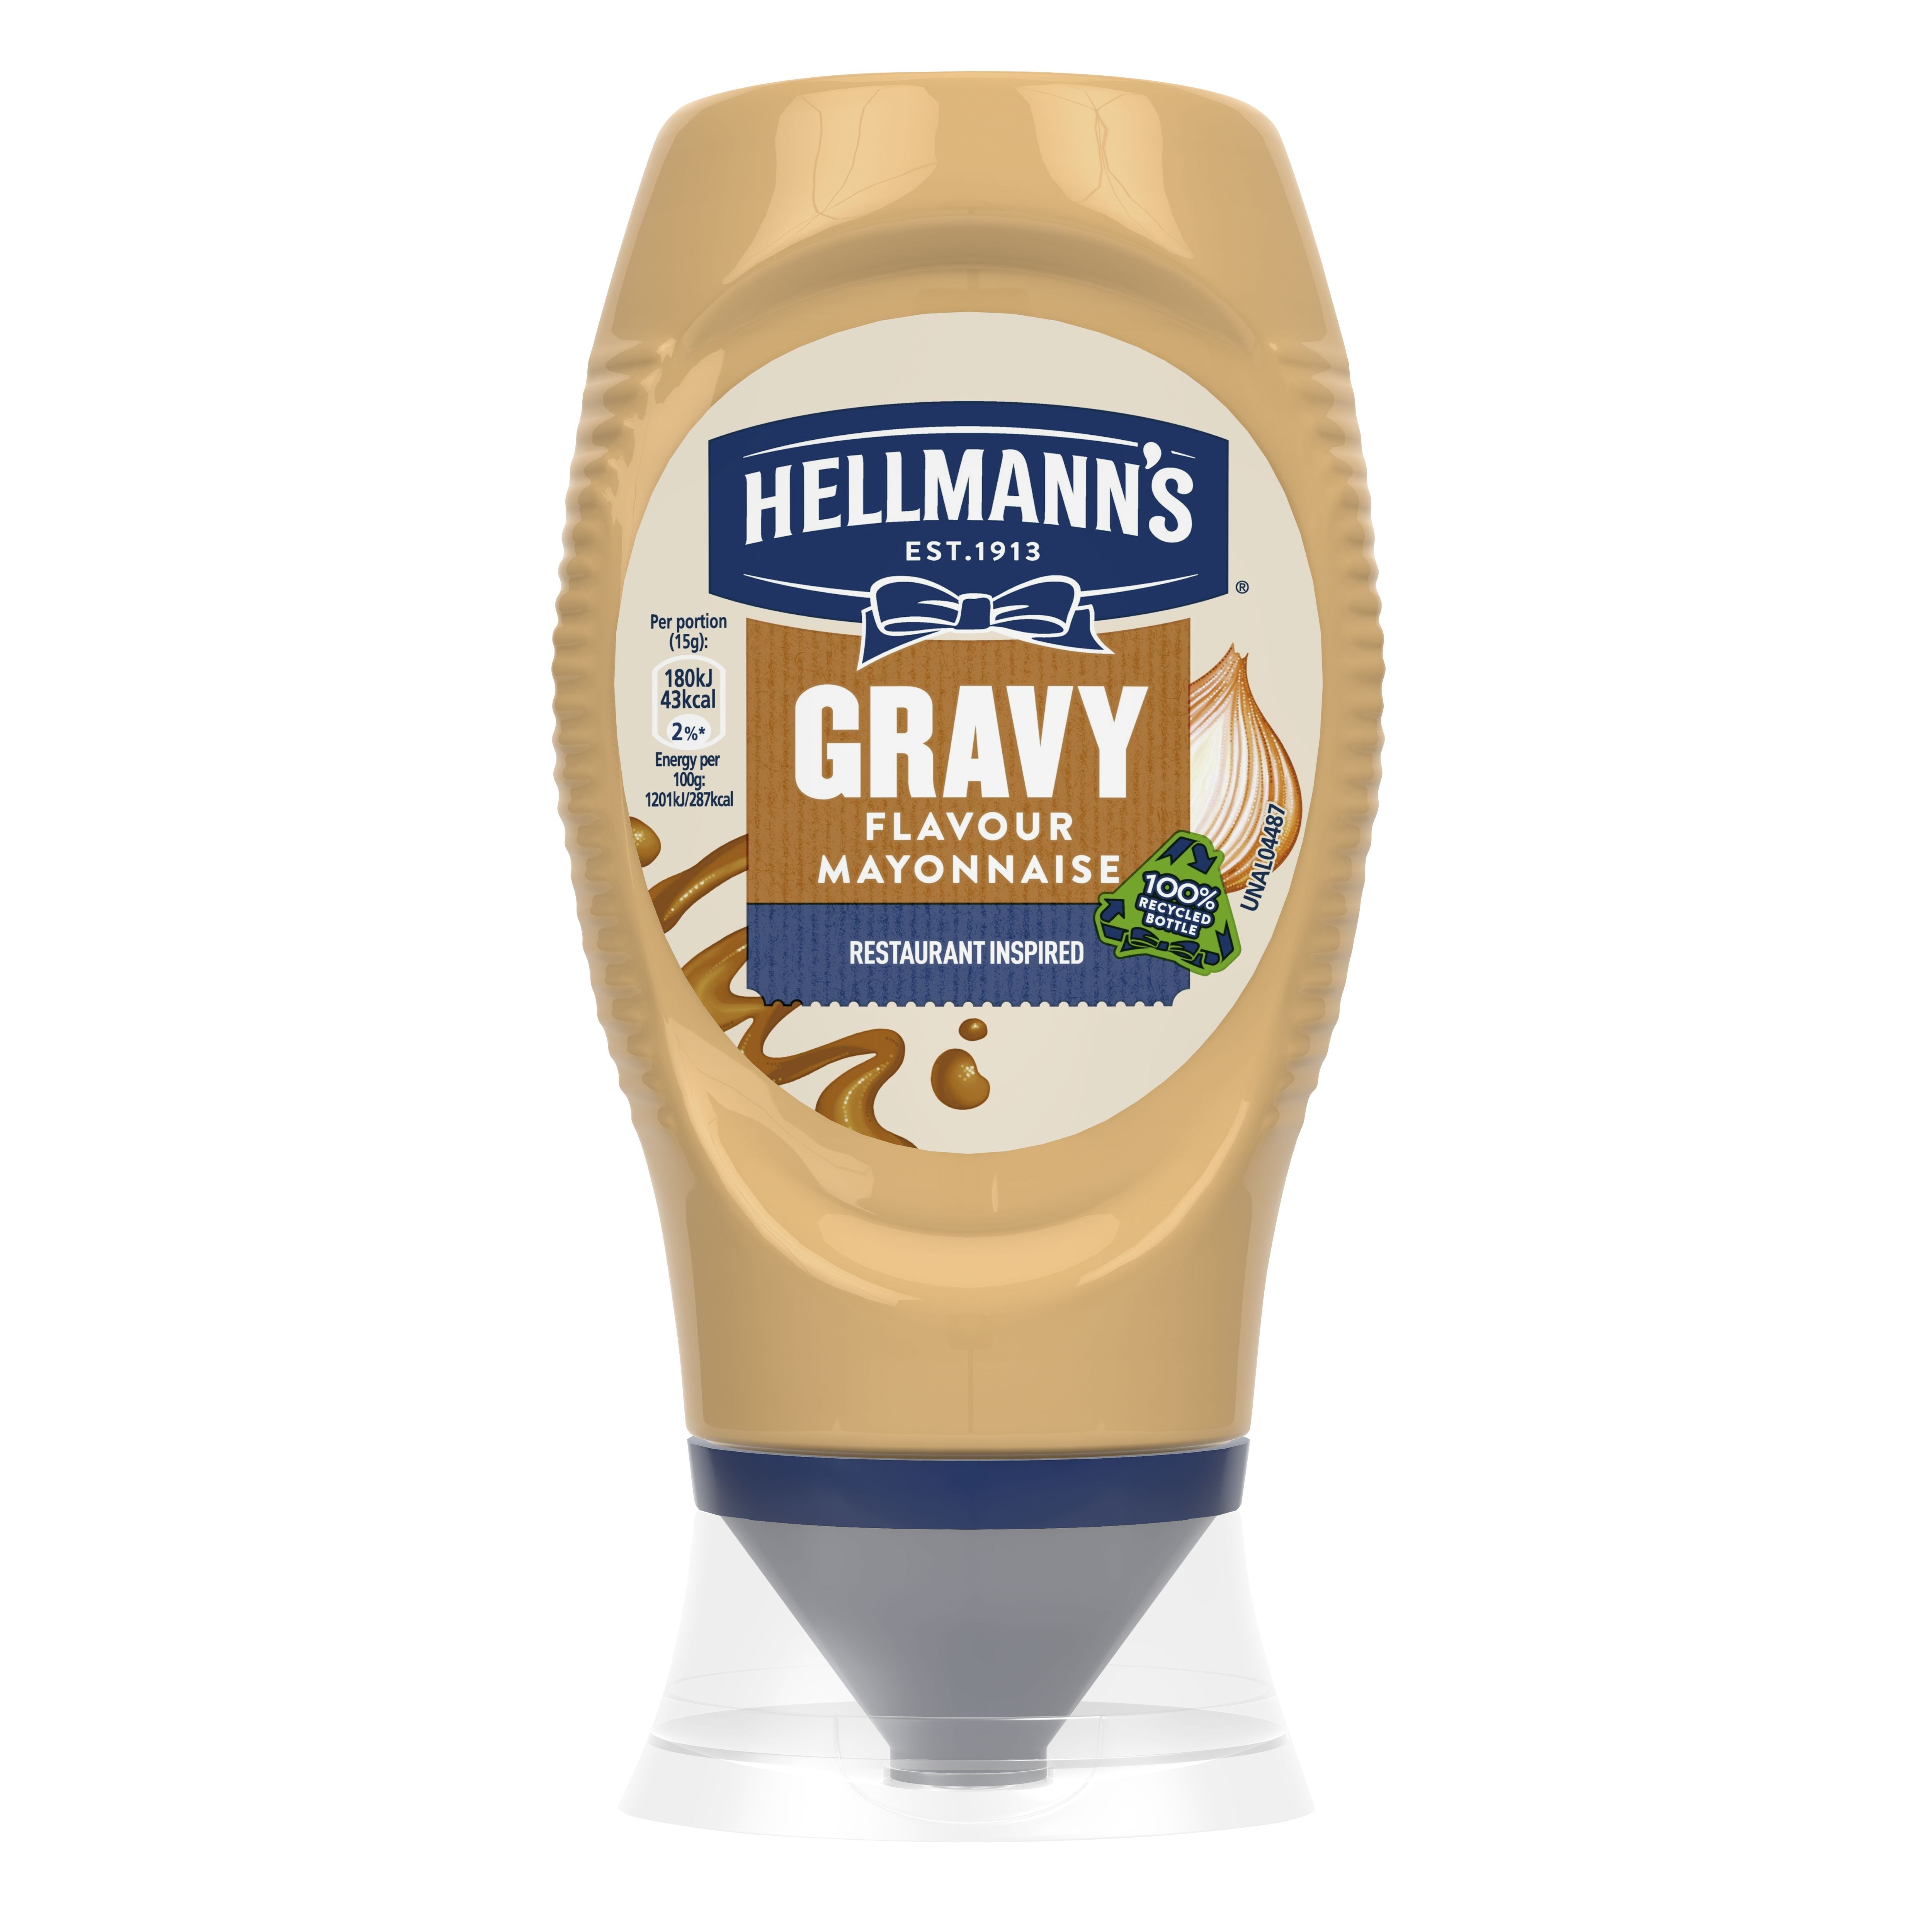 Hellmann’s new Gravy Mayonnaise